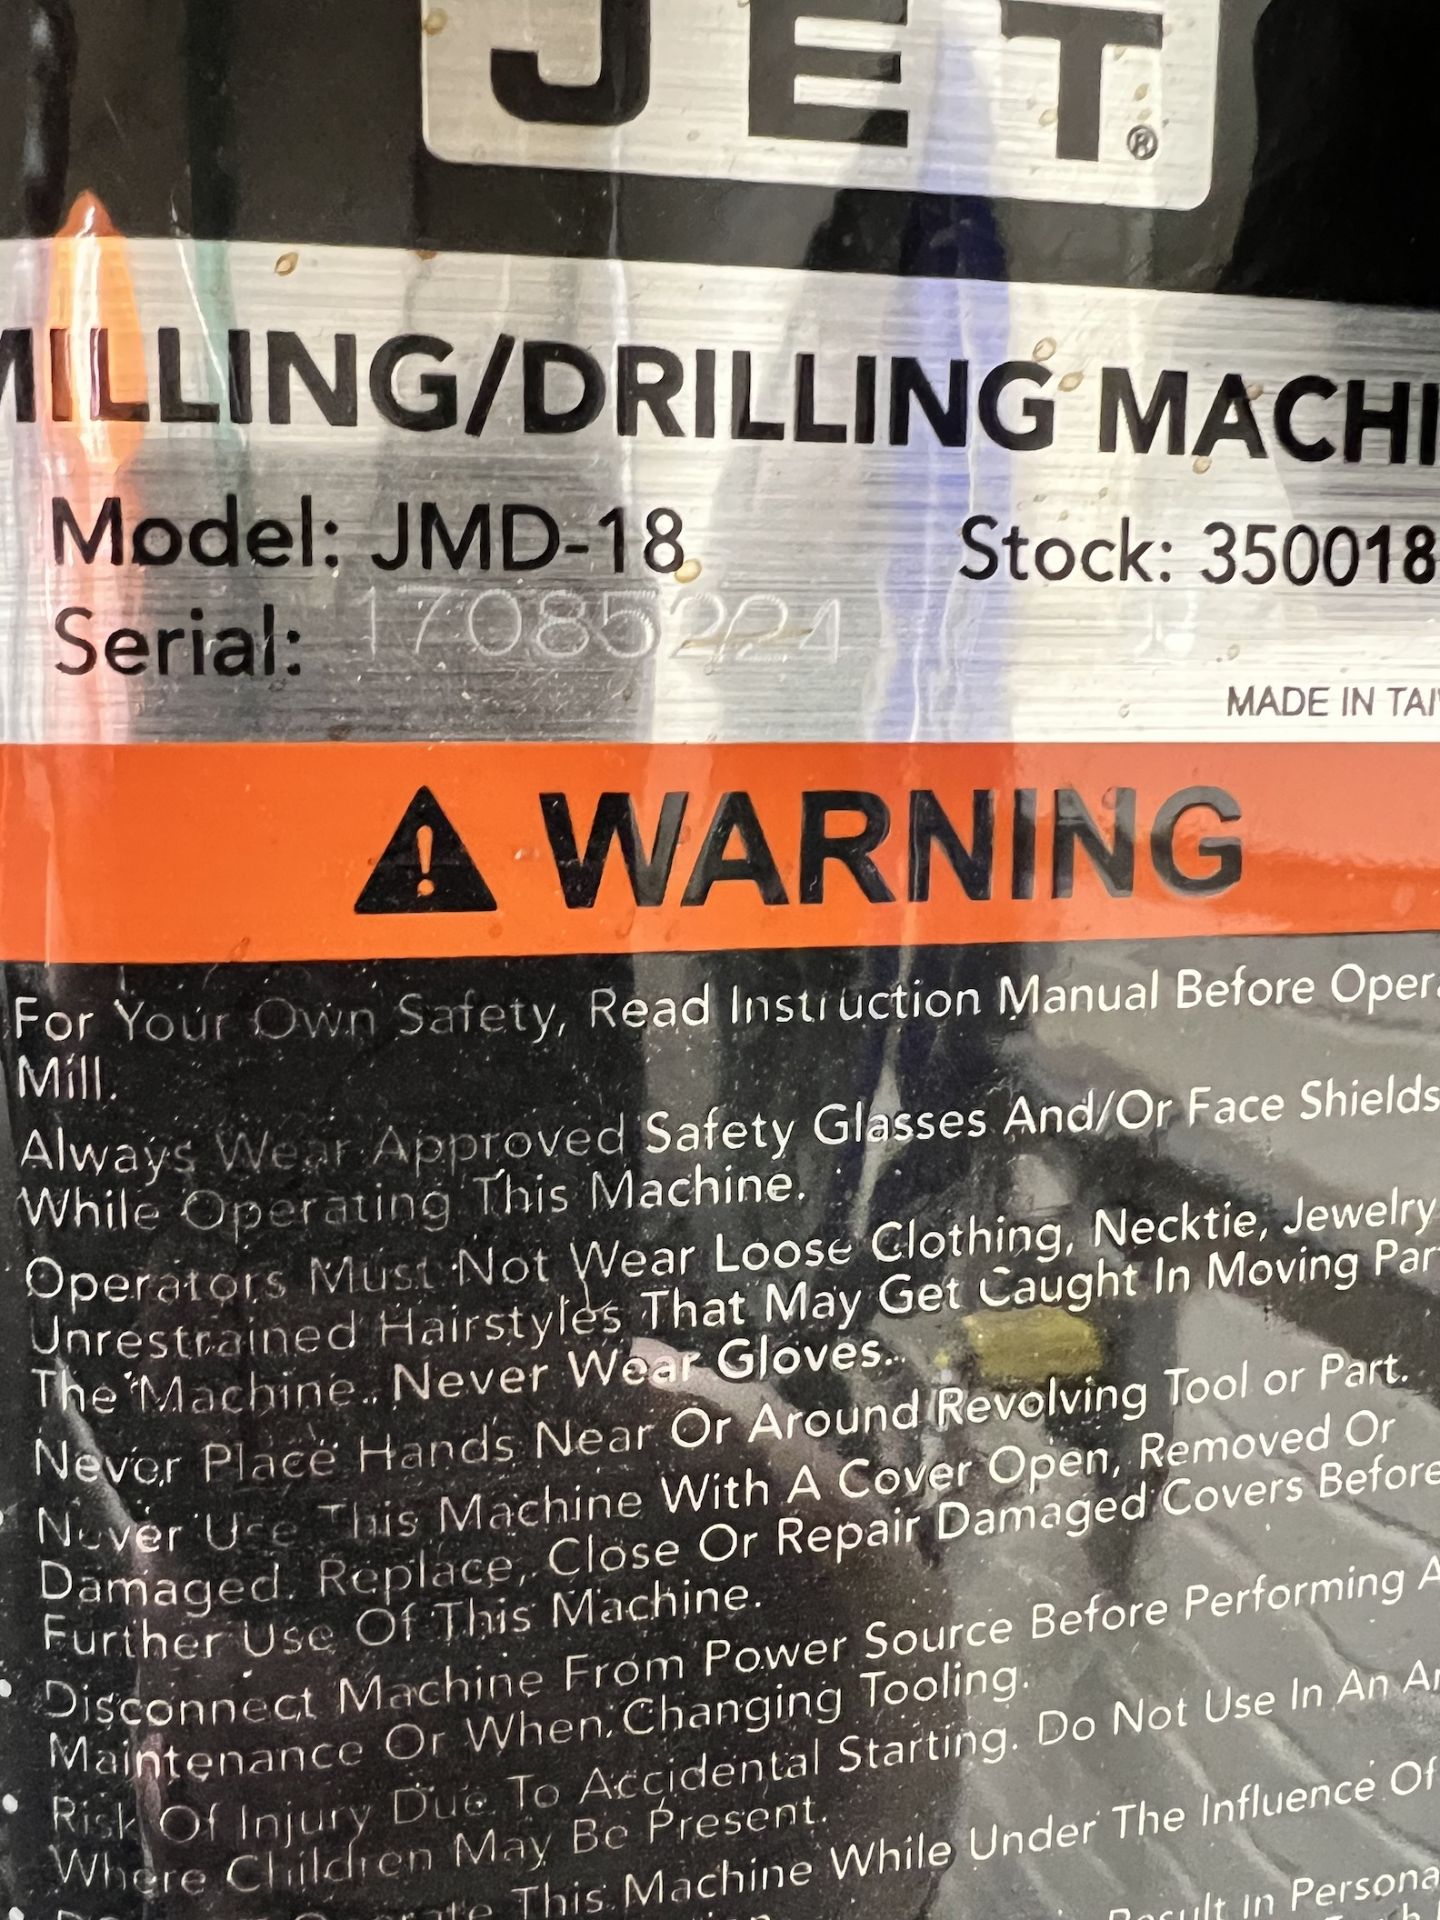 JET PEDESTAL MILLING / DRILLING MACHINE, MODEL JMD-18, S/N 17085221, STOCK 350018 - Image 5 of 6